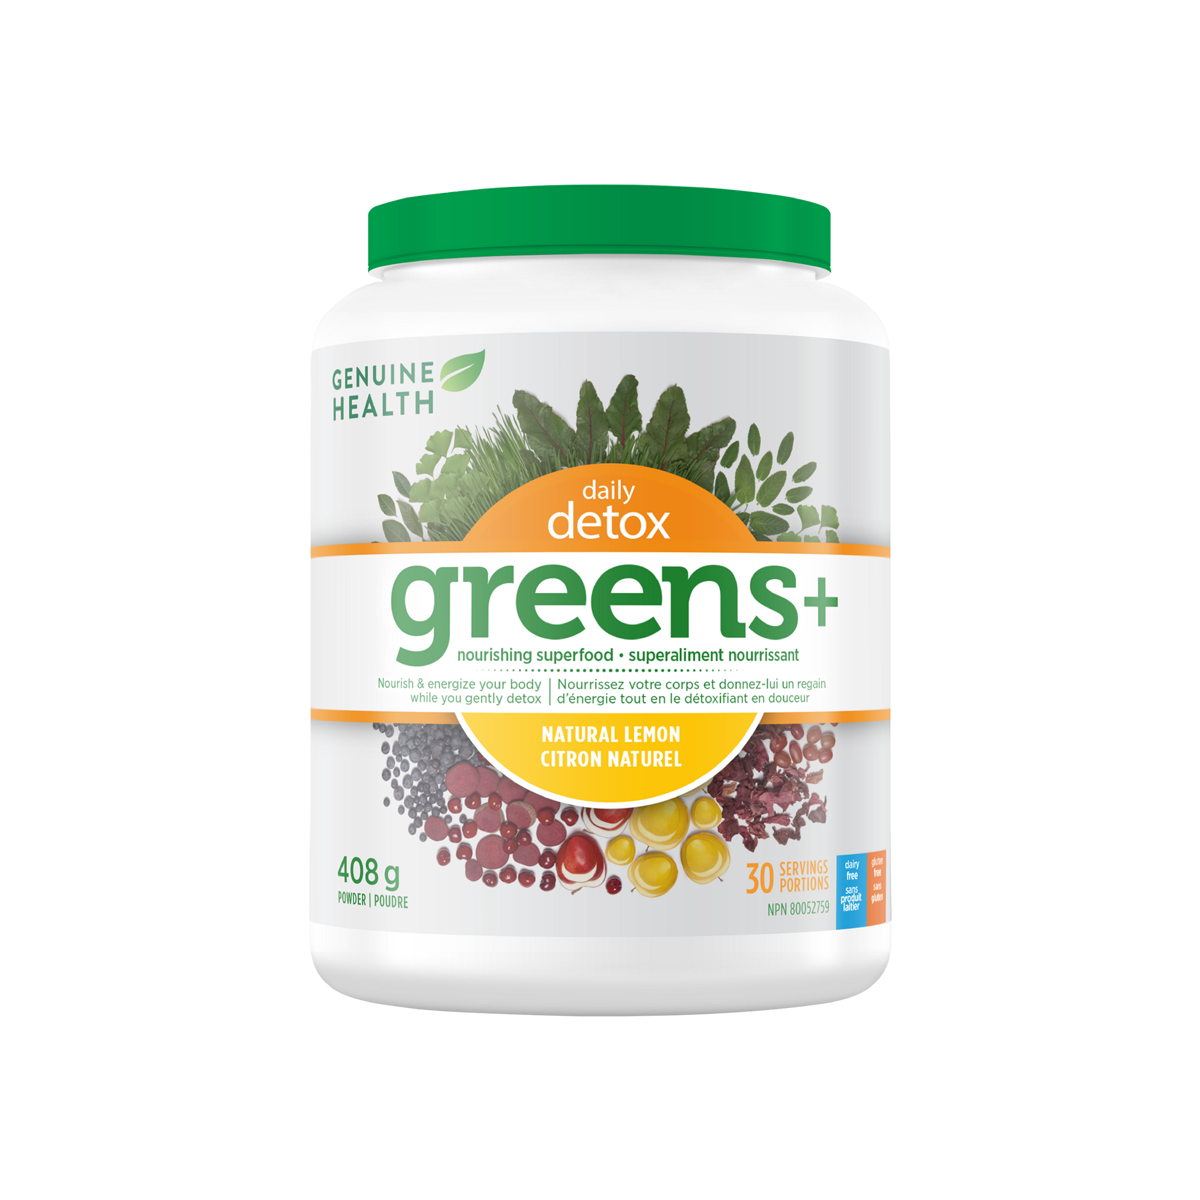 Genuine Health Greens+ Daily Detox Natural Lemon 408g